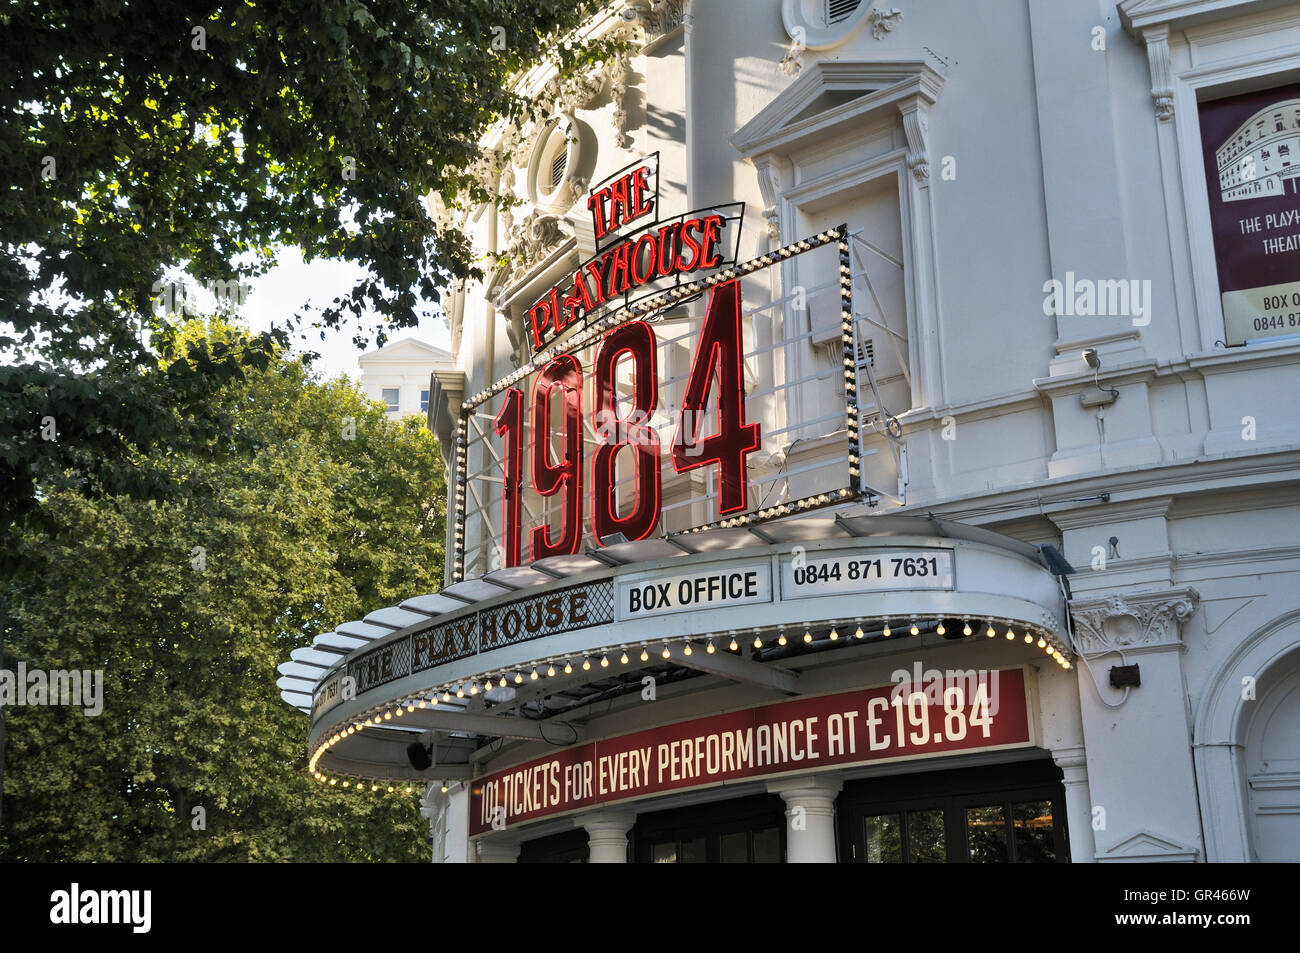 Gefeierte Adaption von George Orwells berühmten Roman 1984 Auftritt bei The Playhouse Theatre, London, England, UK Stockfoto